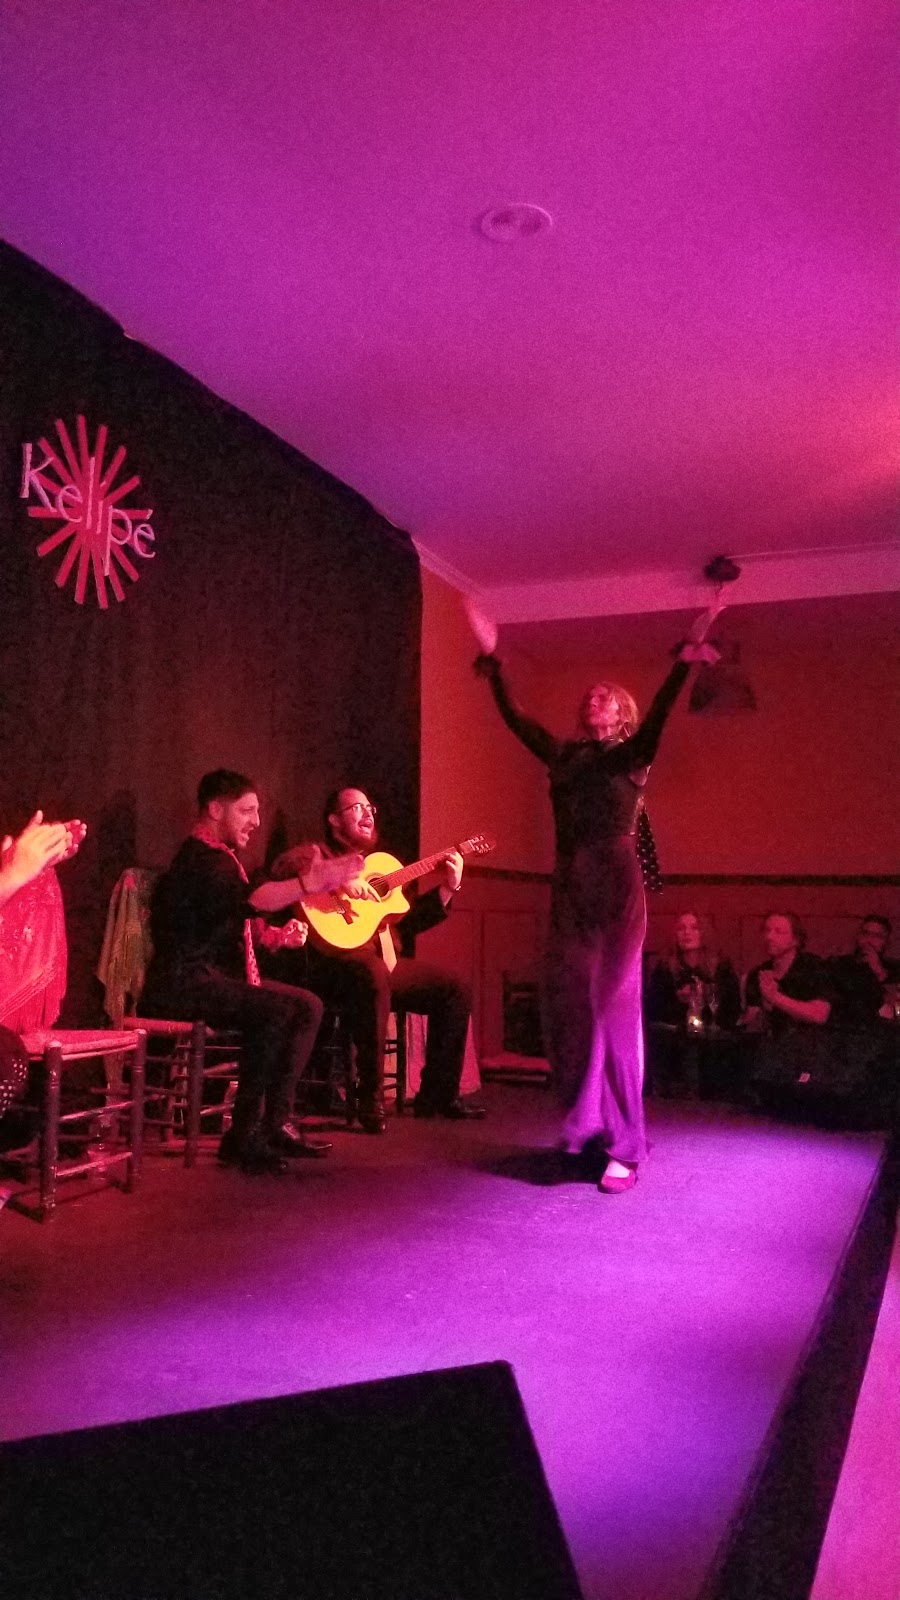 Kelipe Centro de Arte Flamenco | C. Muro de Prta Nueva, 10, 29005 Málaga, Spain | Phone: 665 09 73 59